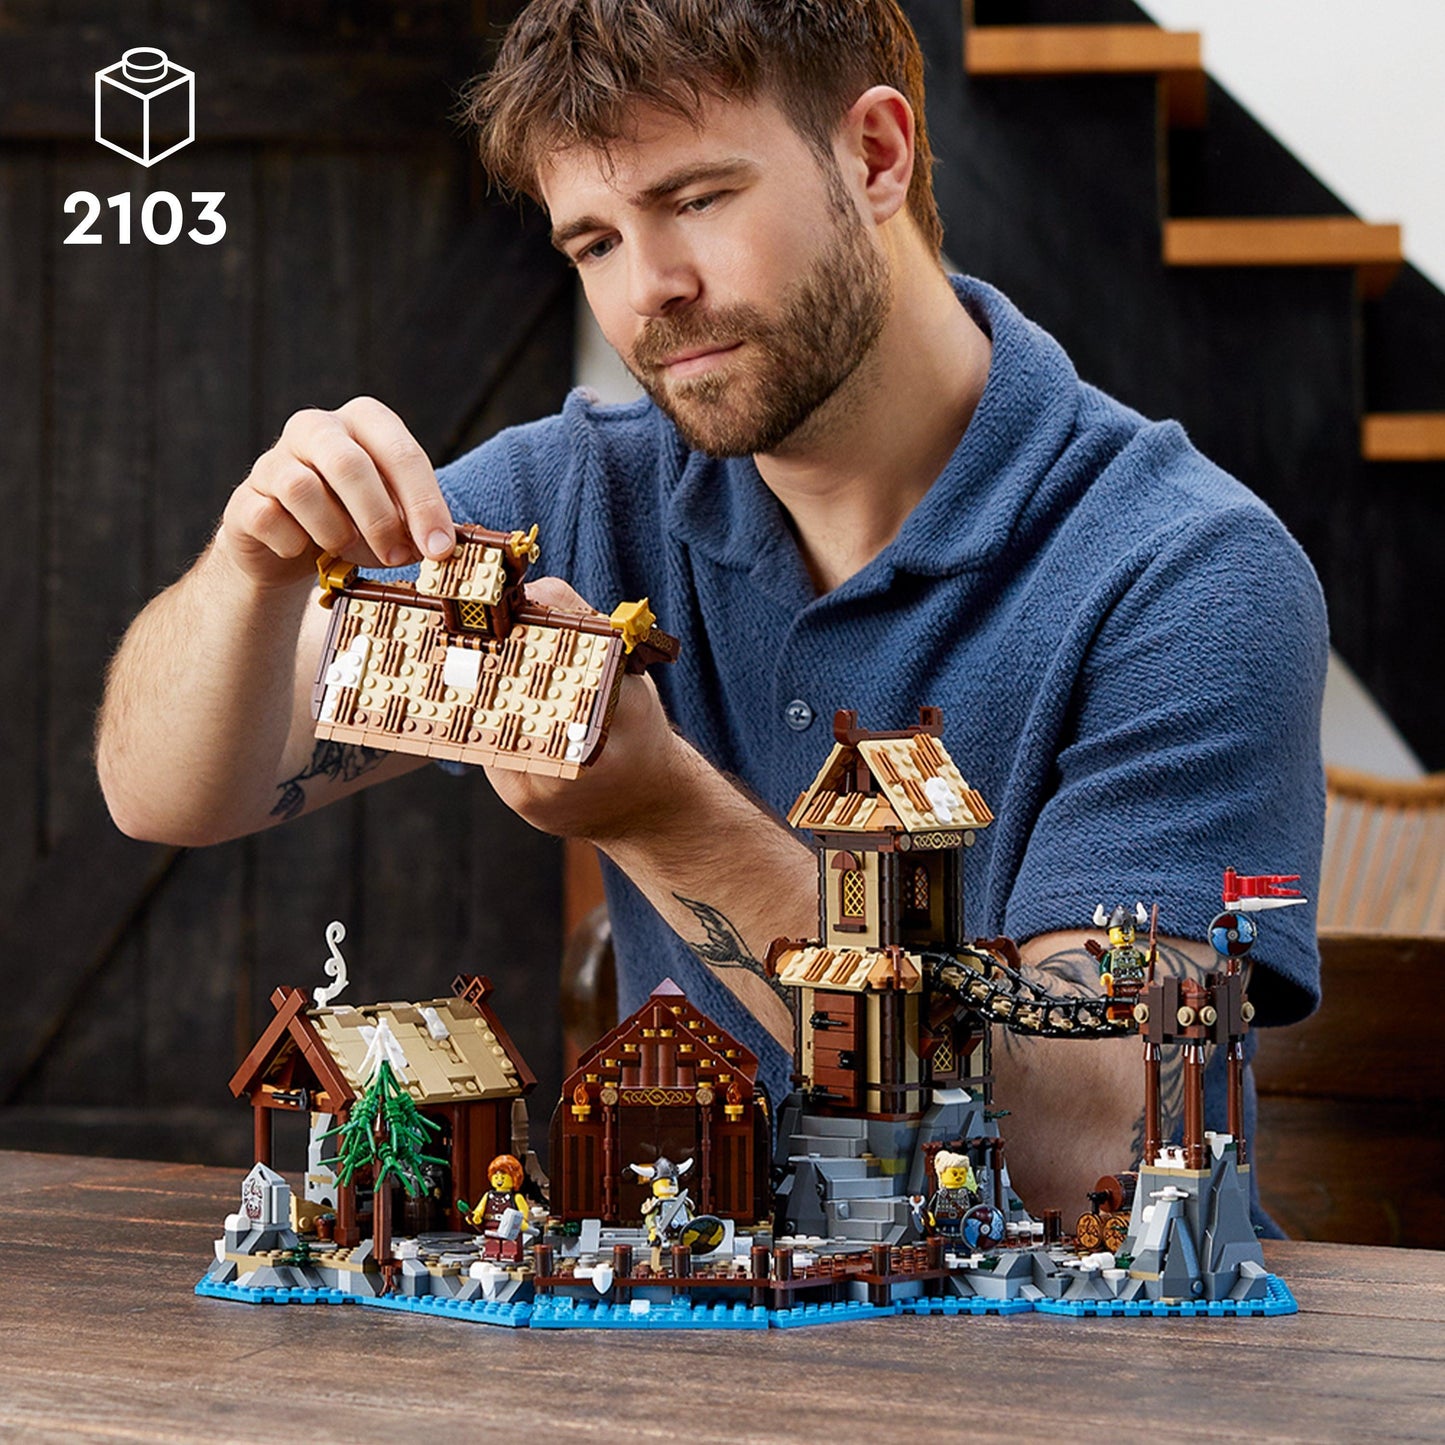 LEGO Vikingdorp 21343 Ideas LEGO @ 2TTOYS LEGO IDEAS €. 138.99